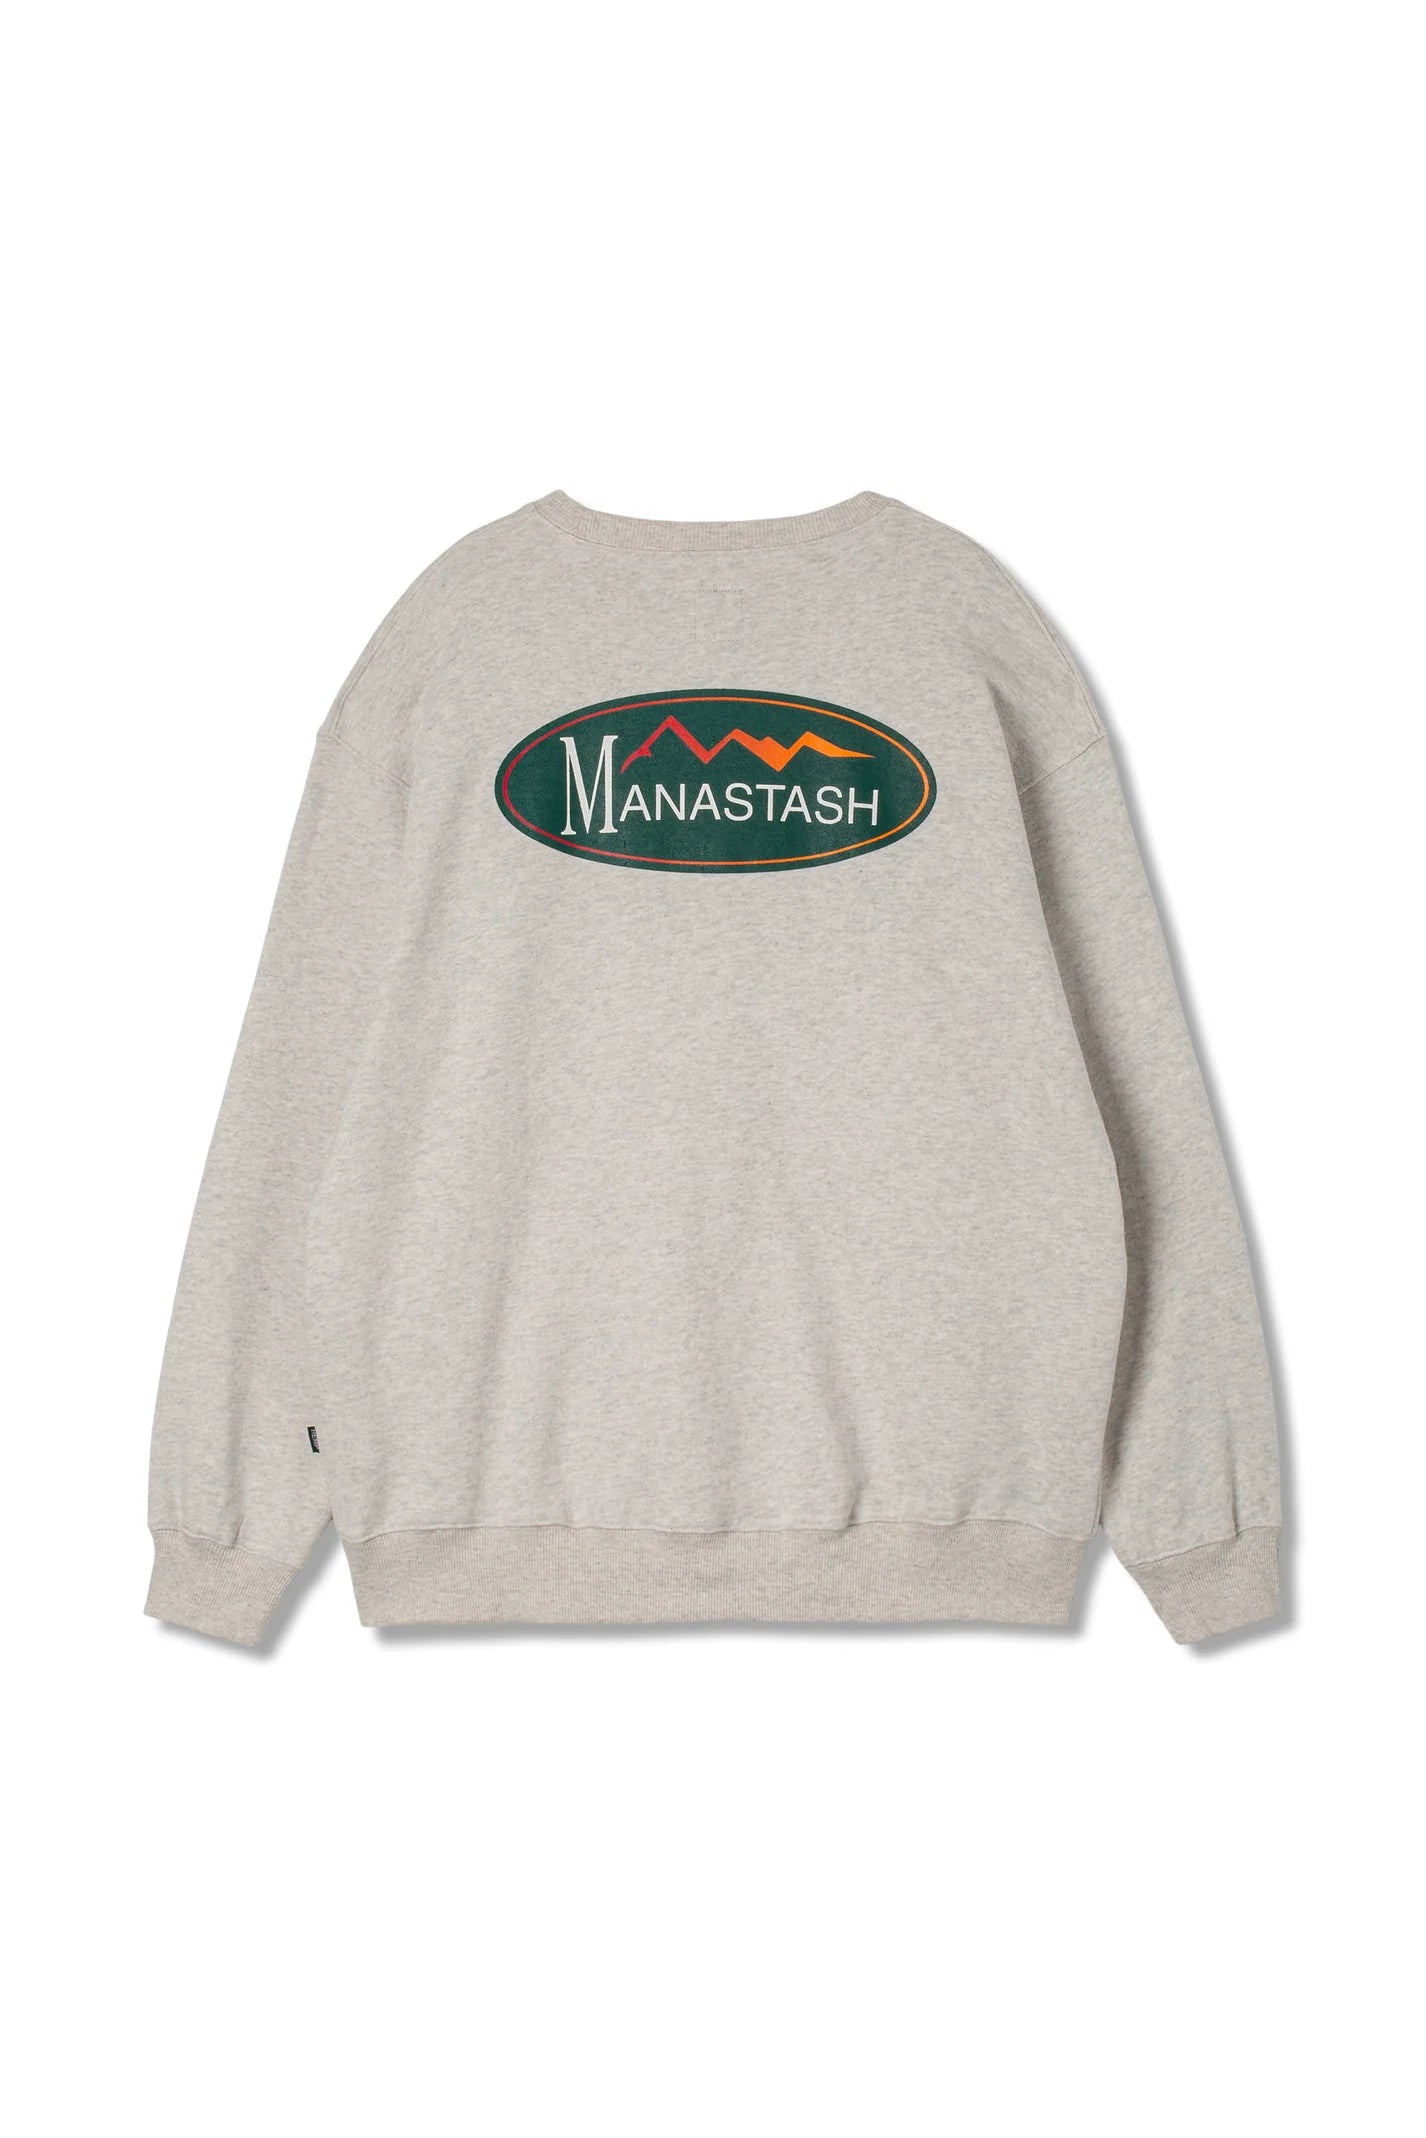 Manastash - Cascade Sweatshirts Est.1993 in Oatmeal - Space Camp